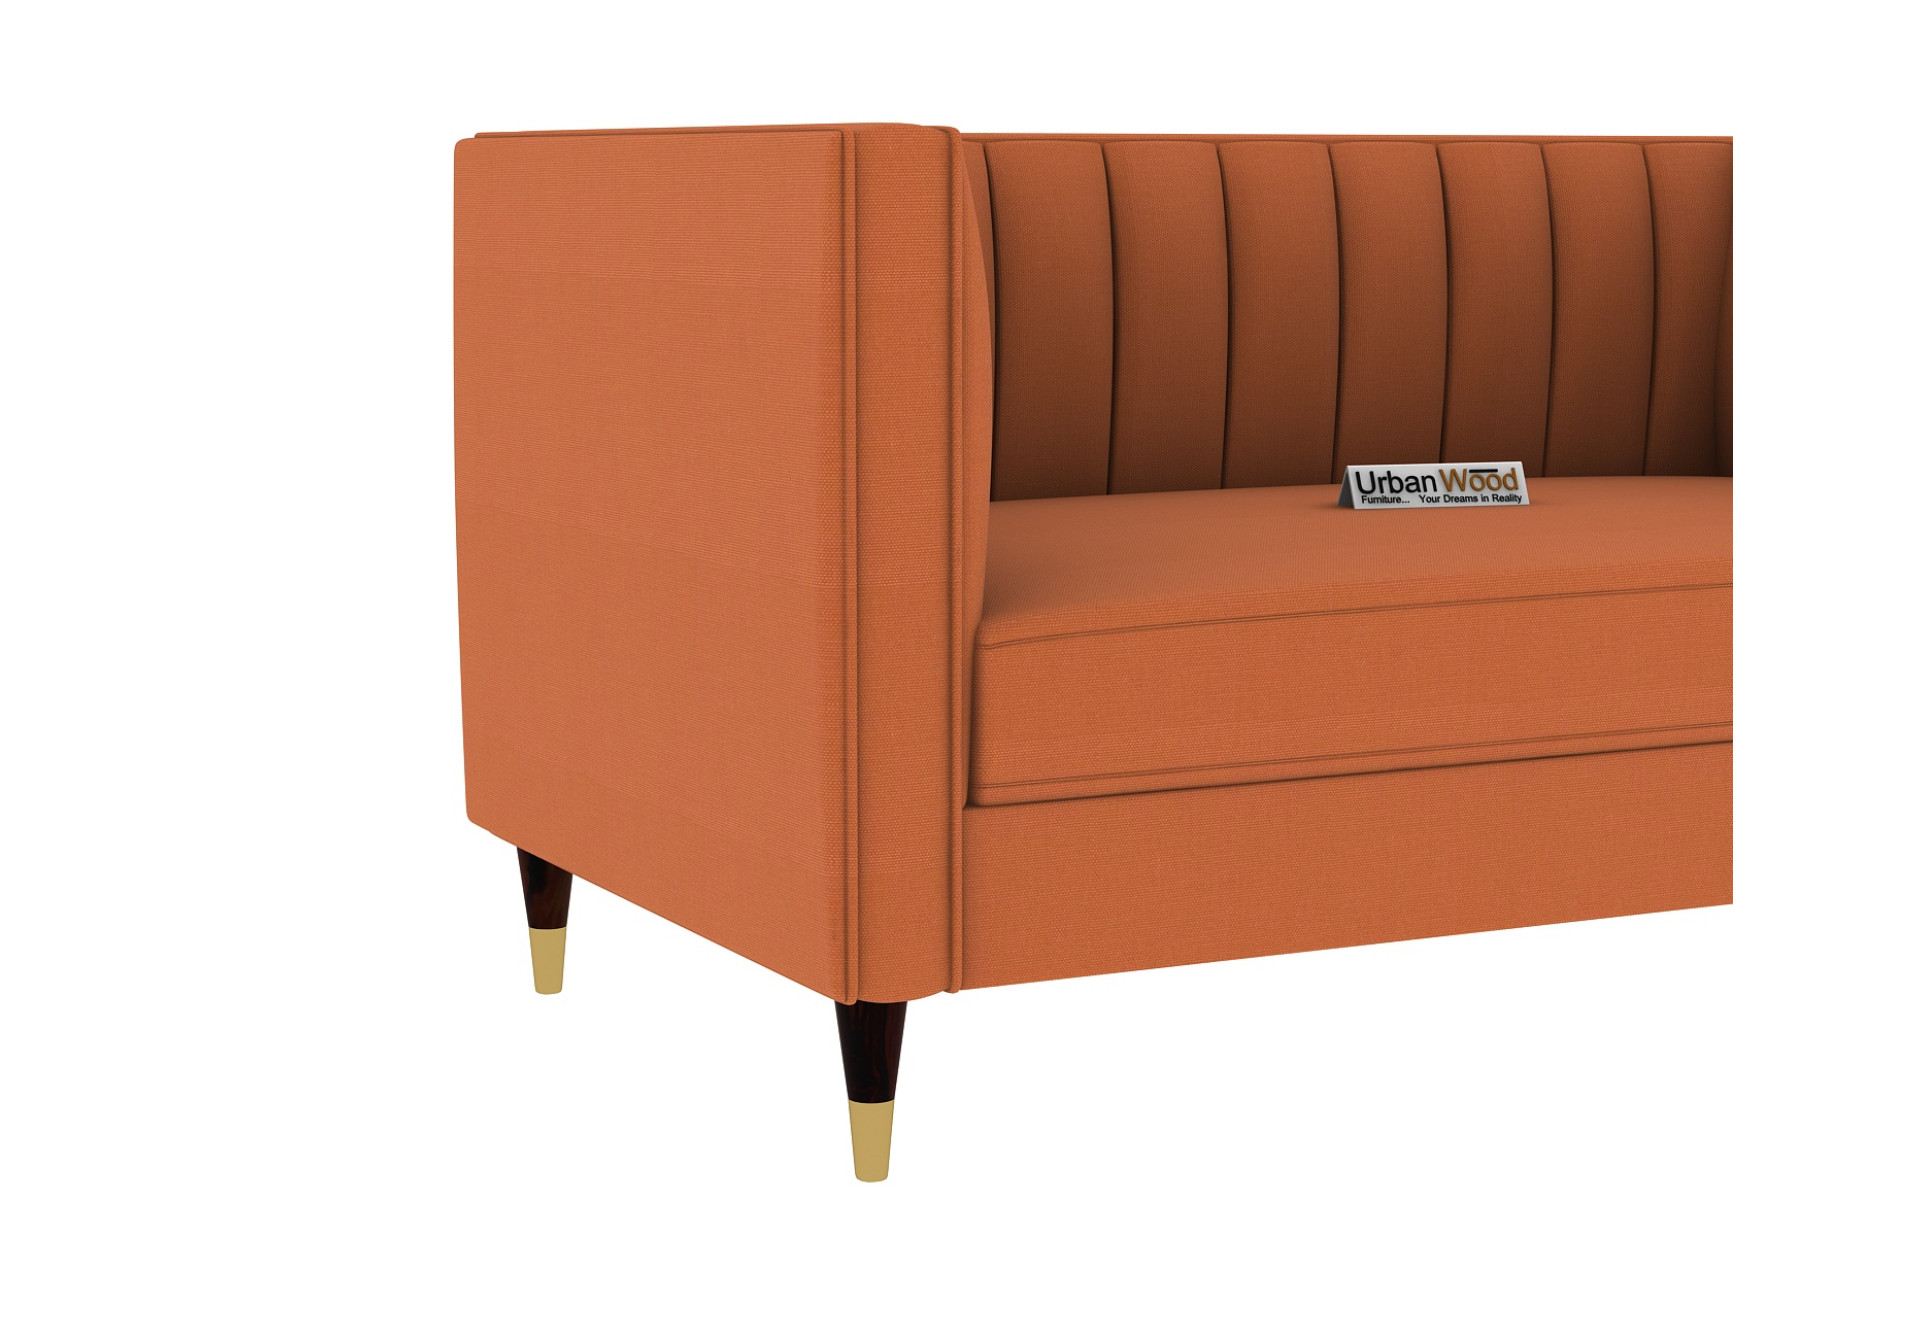 Abro 2 Seater Fabric Sofa (Cotton, Diana Orange)